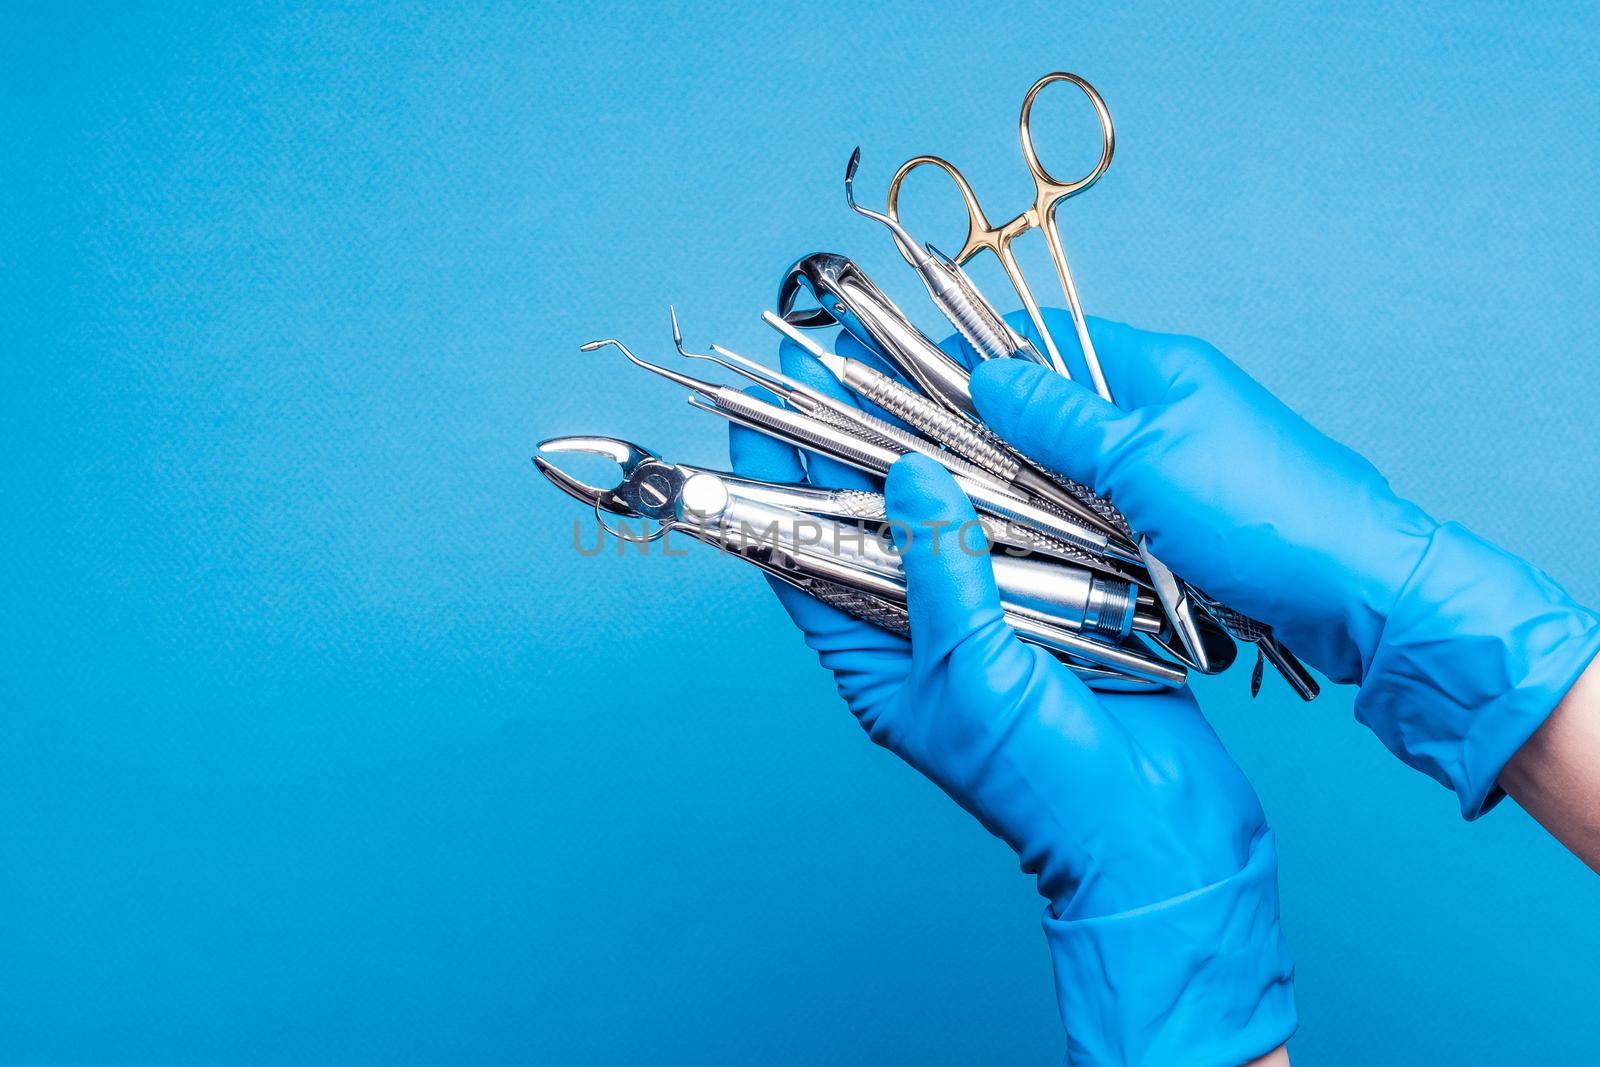 Hands in blue gloves holding dental equipment and metal instruments by GekaSkr